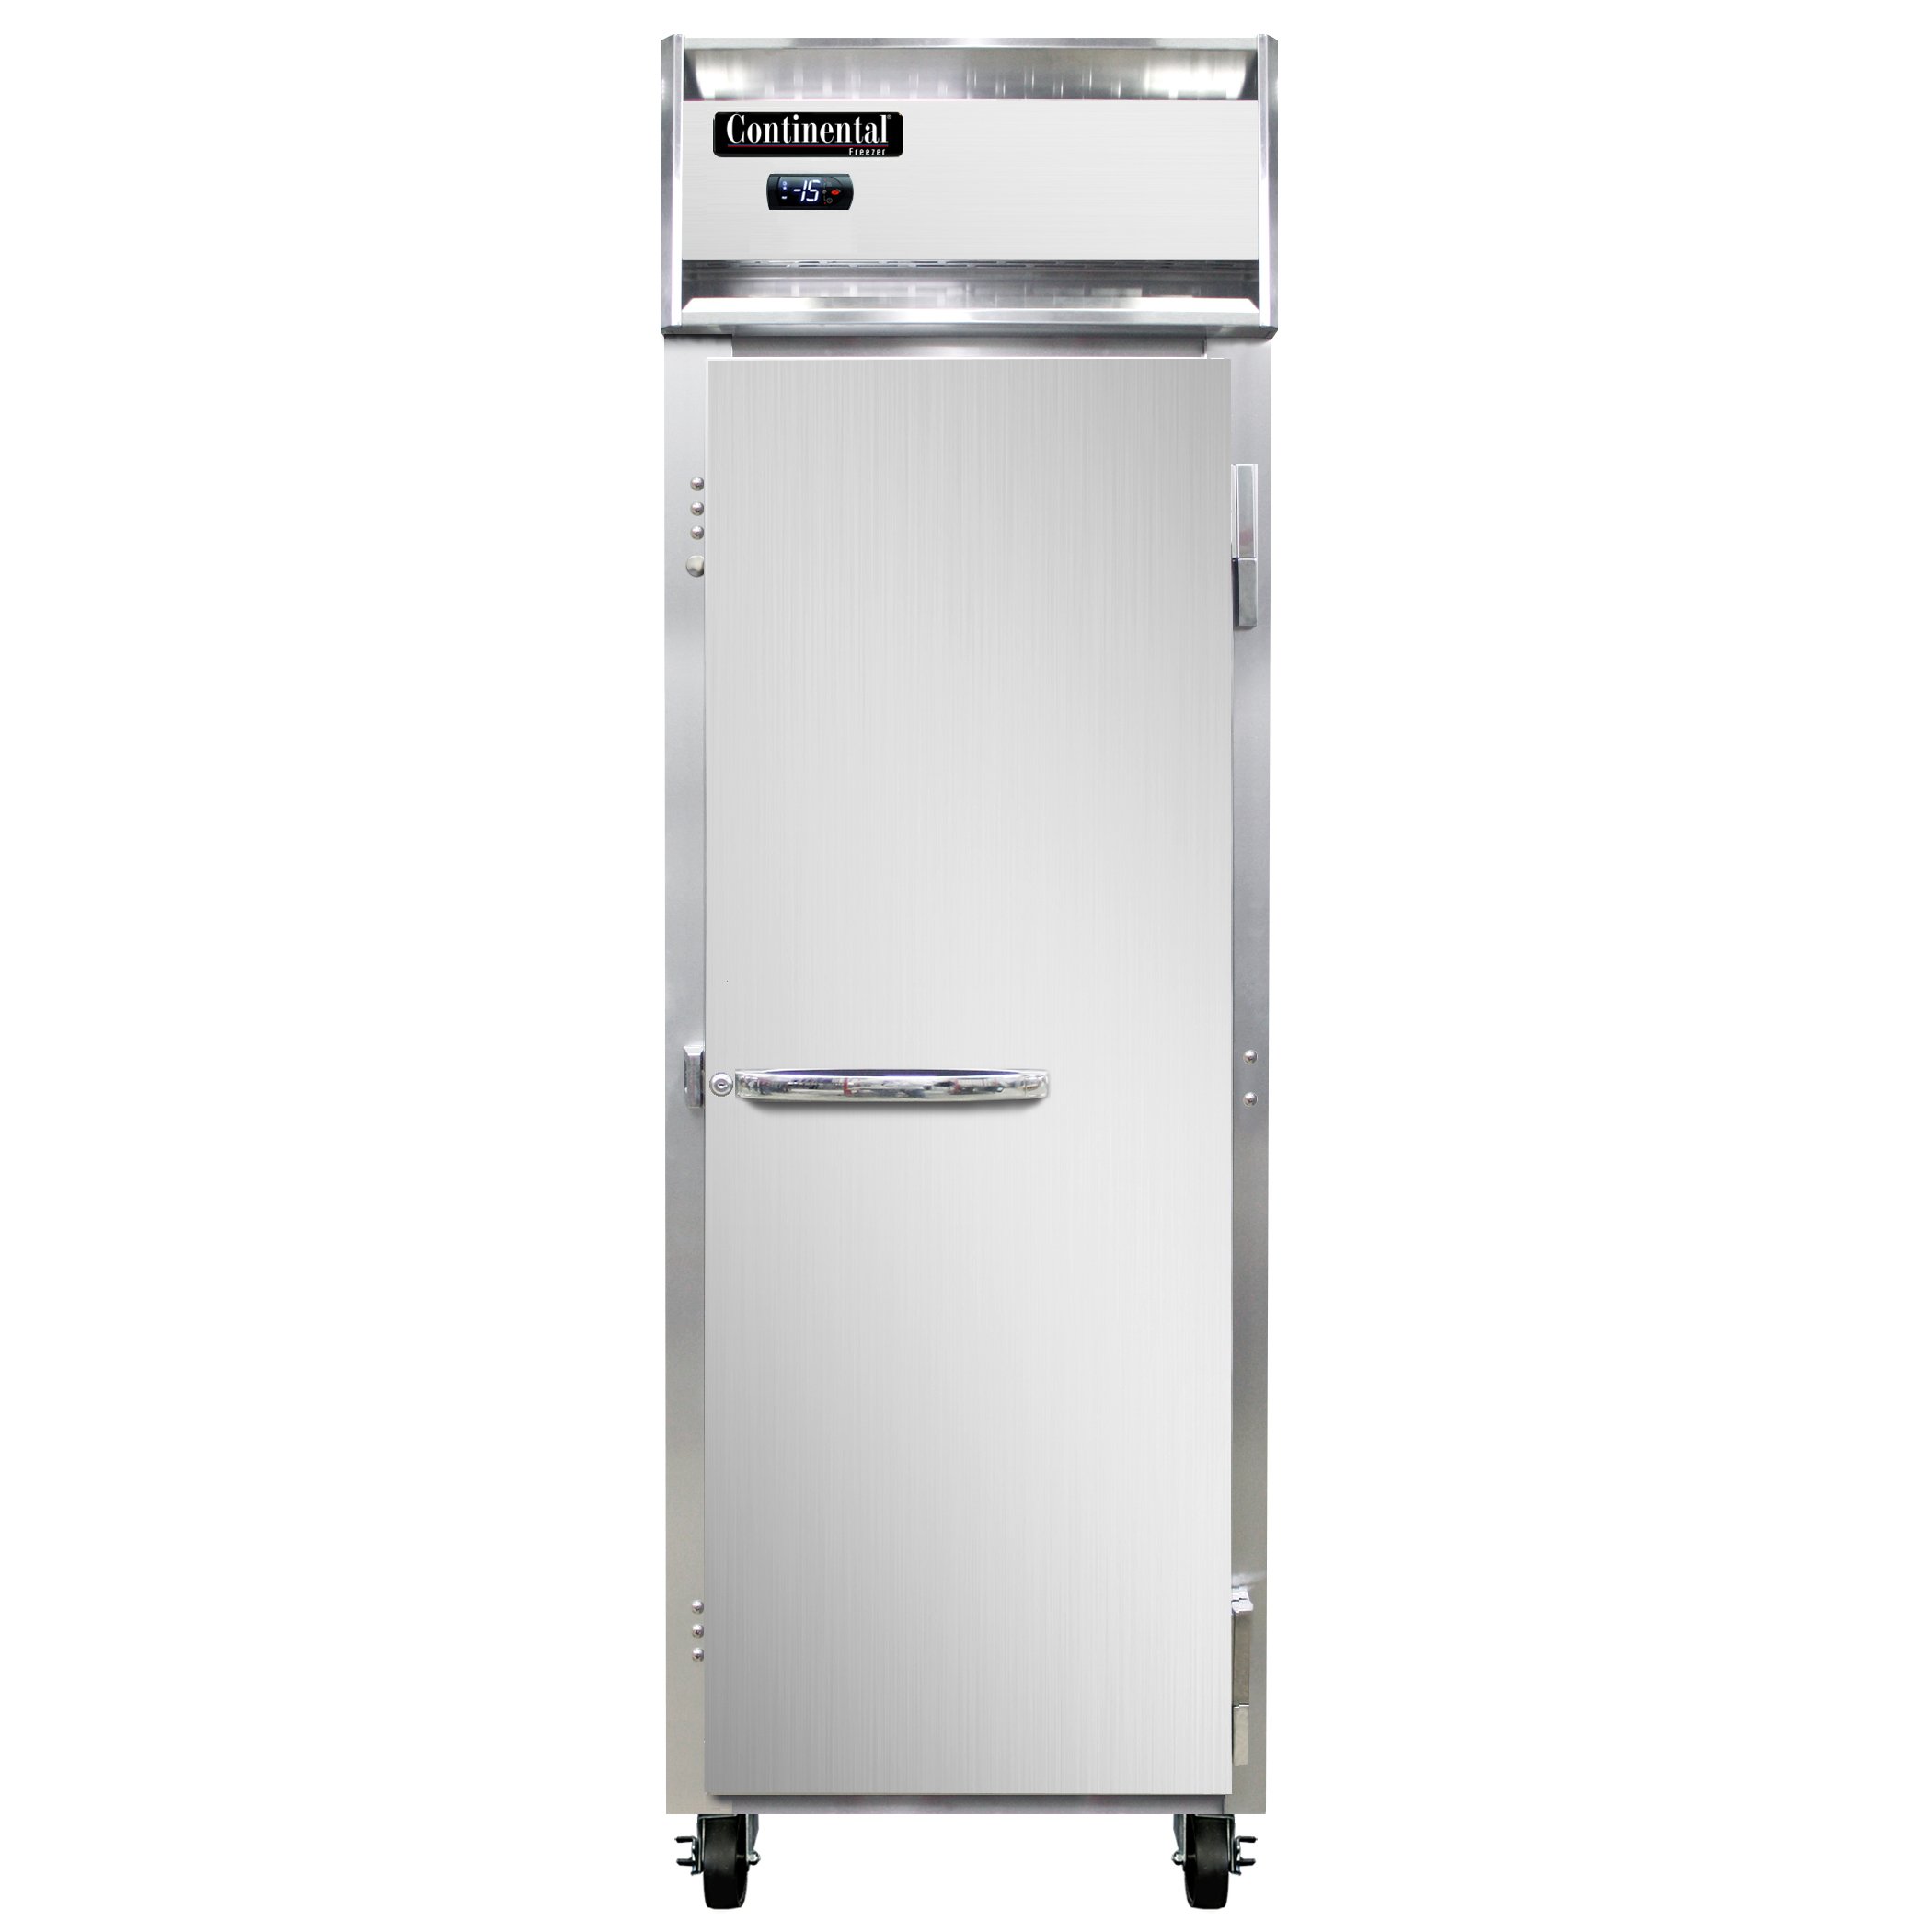 Continental Refrigerator 1F-LT Reach-In Low Temperature Freezer